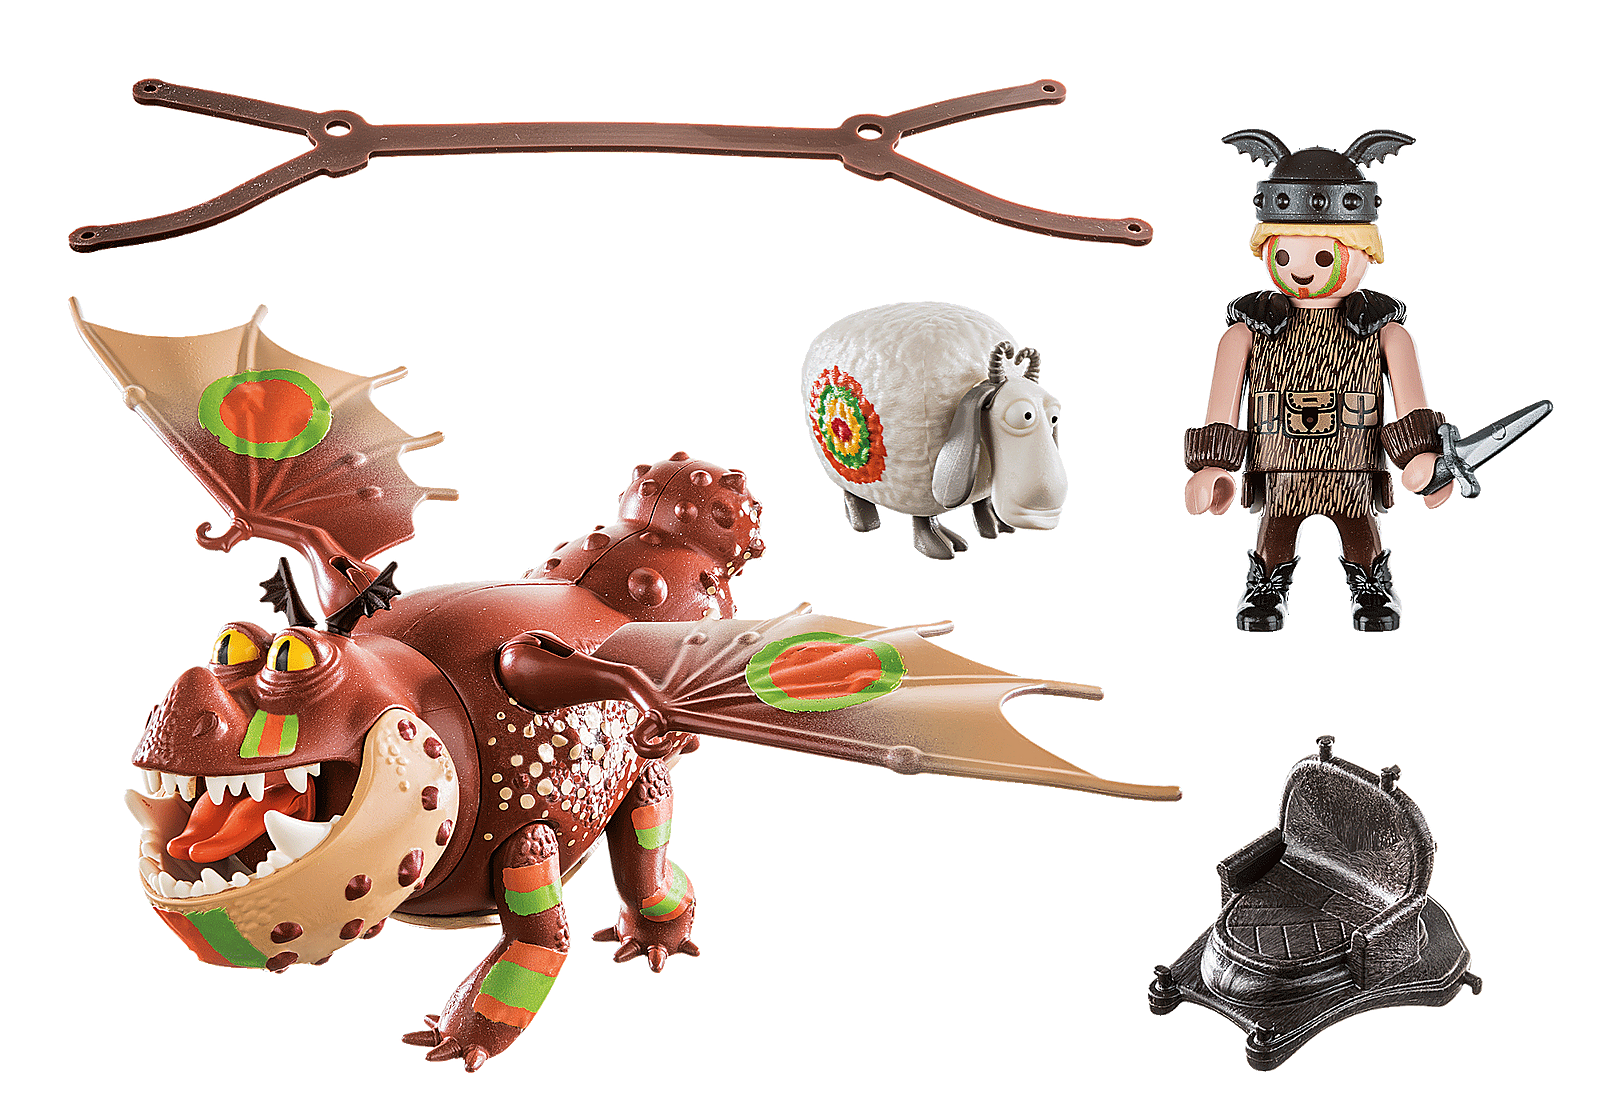 Playmobil Dragons - Λέπιας Και Χοντροκέφαλος 70729